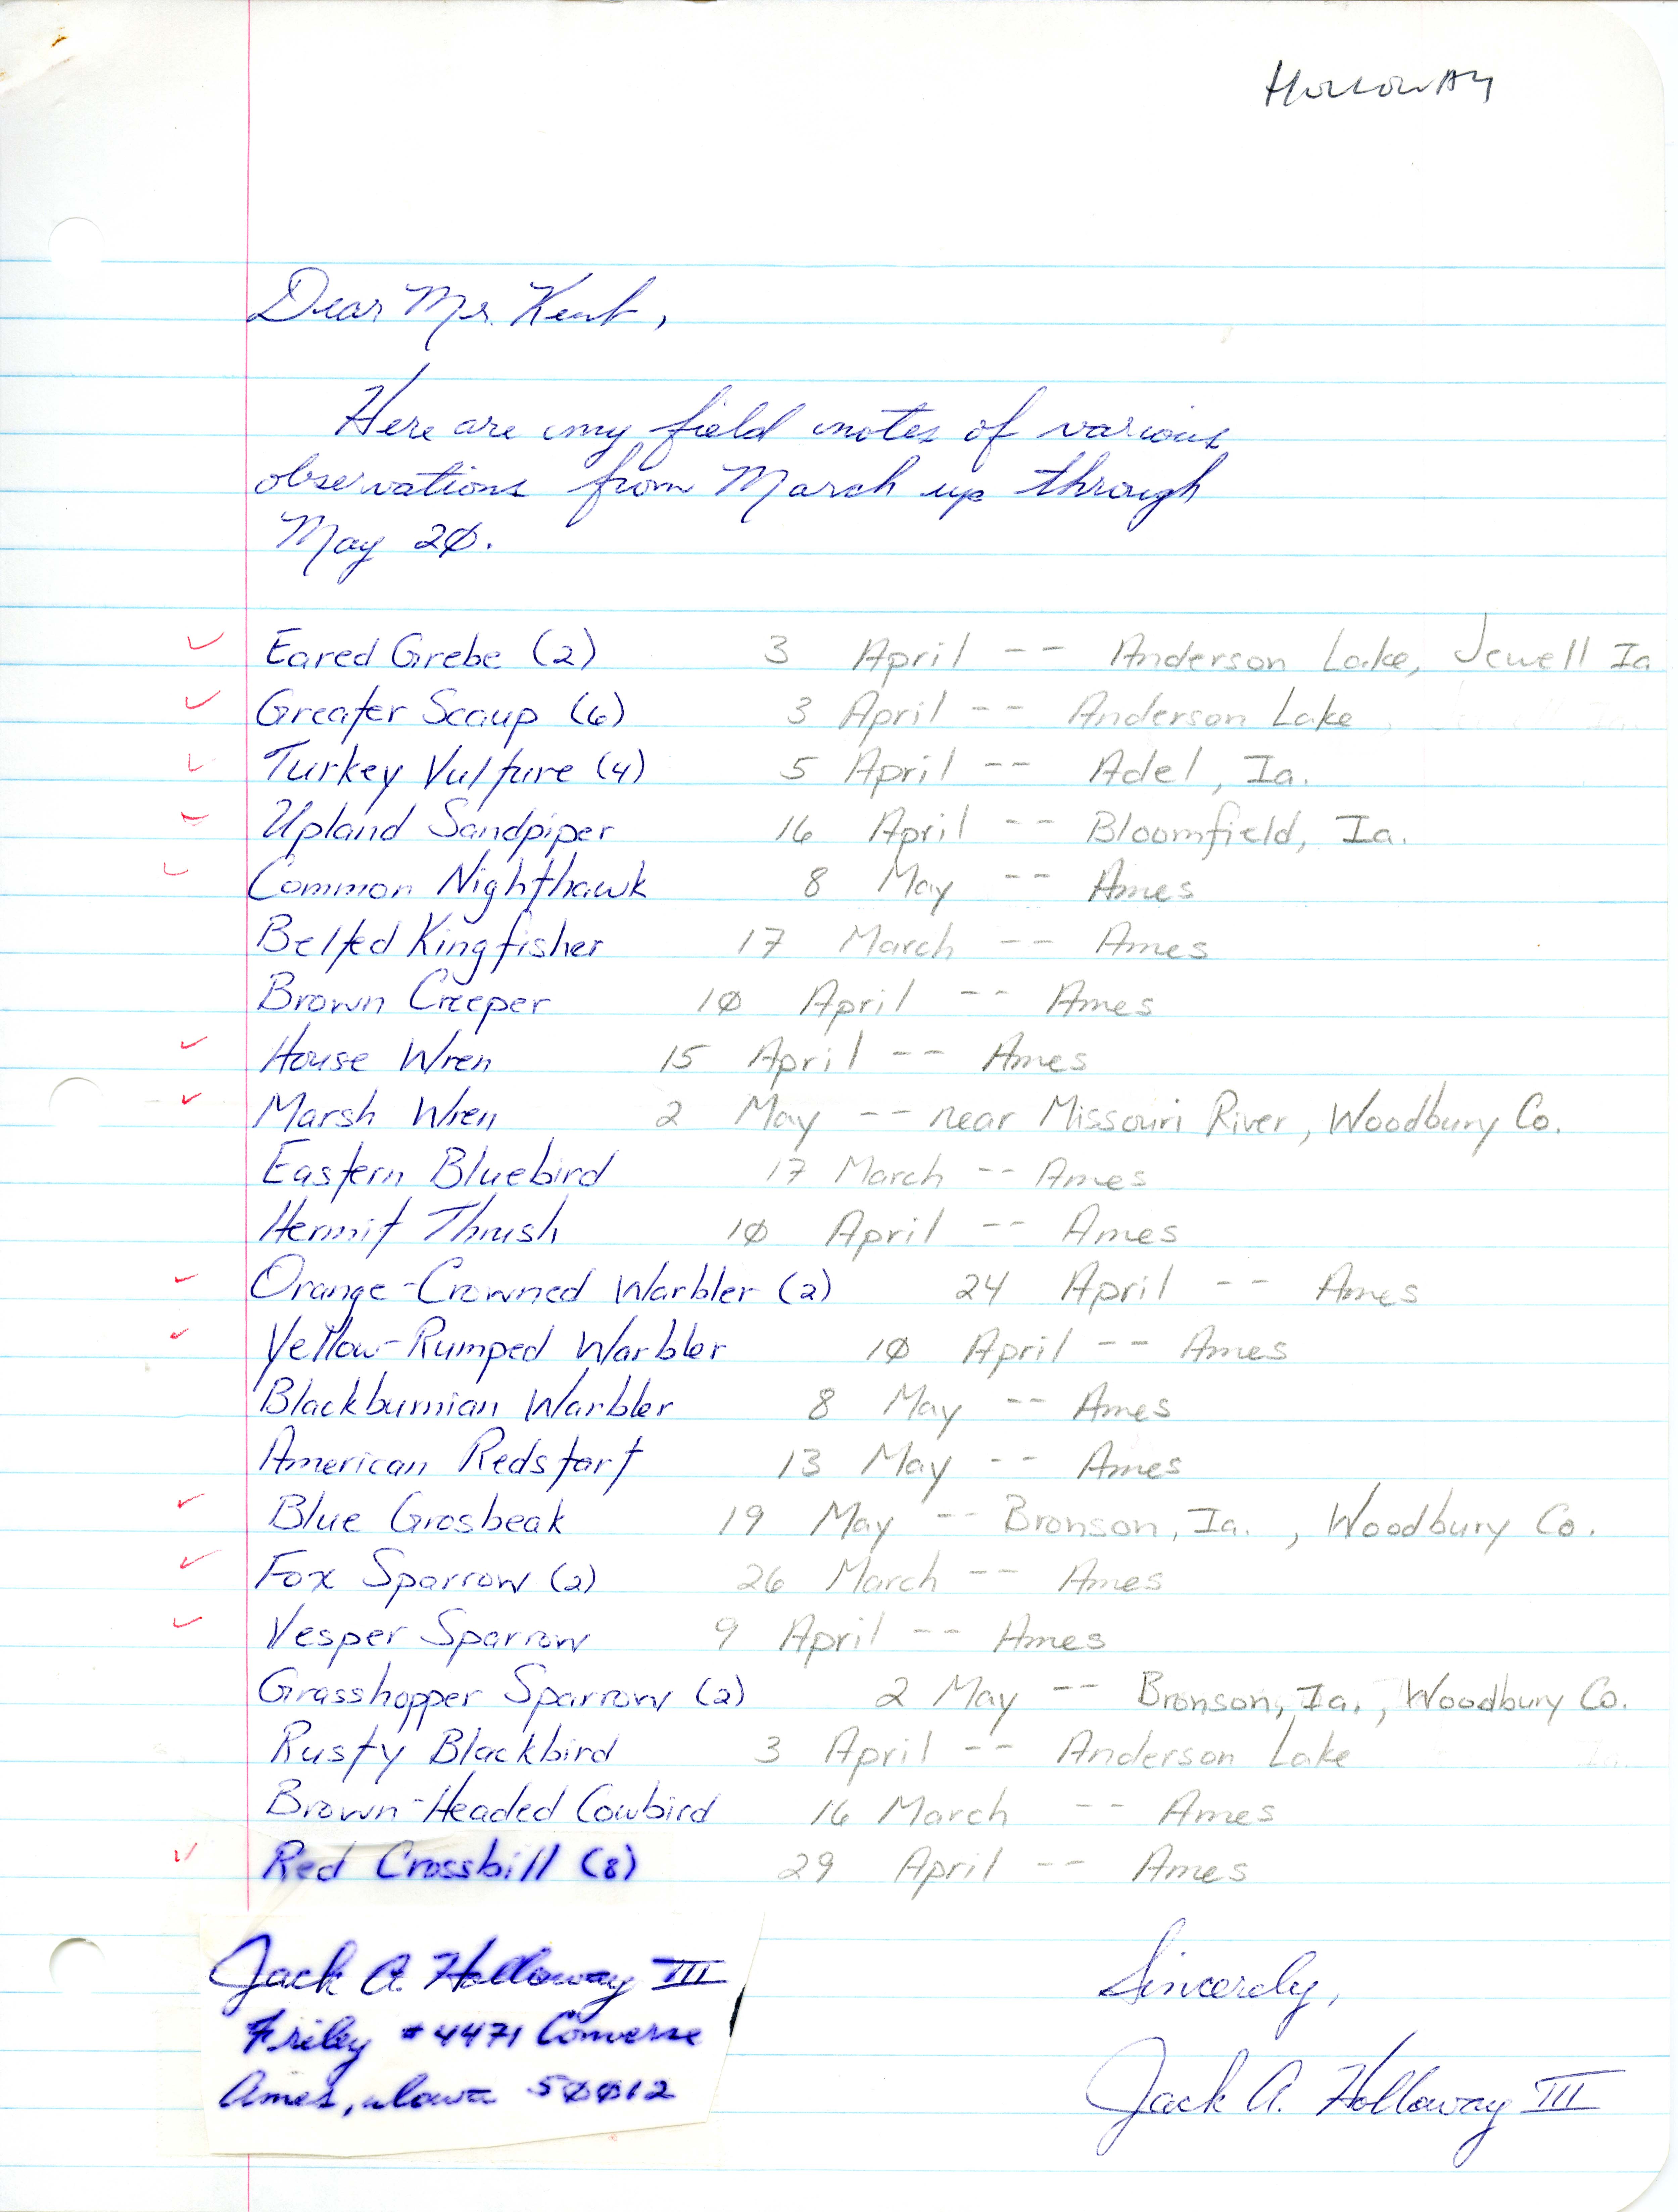 Jack A. Holloway III letter to Thomas H. Kent, spring 1985, regarding bird sightings